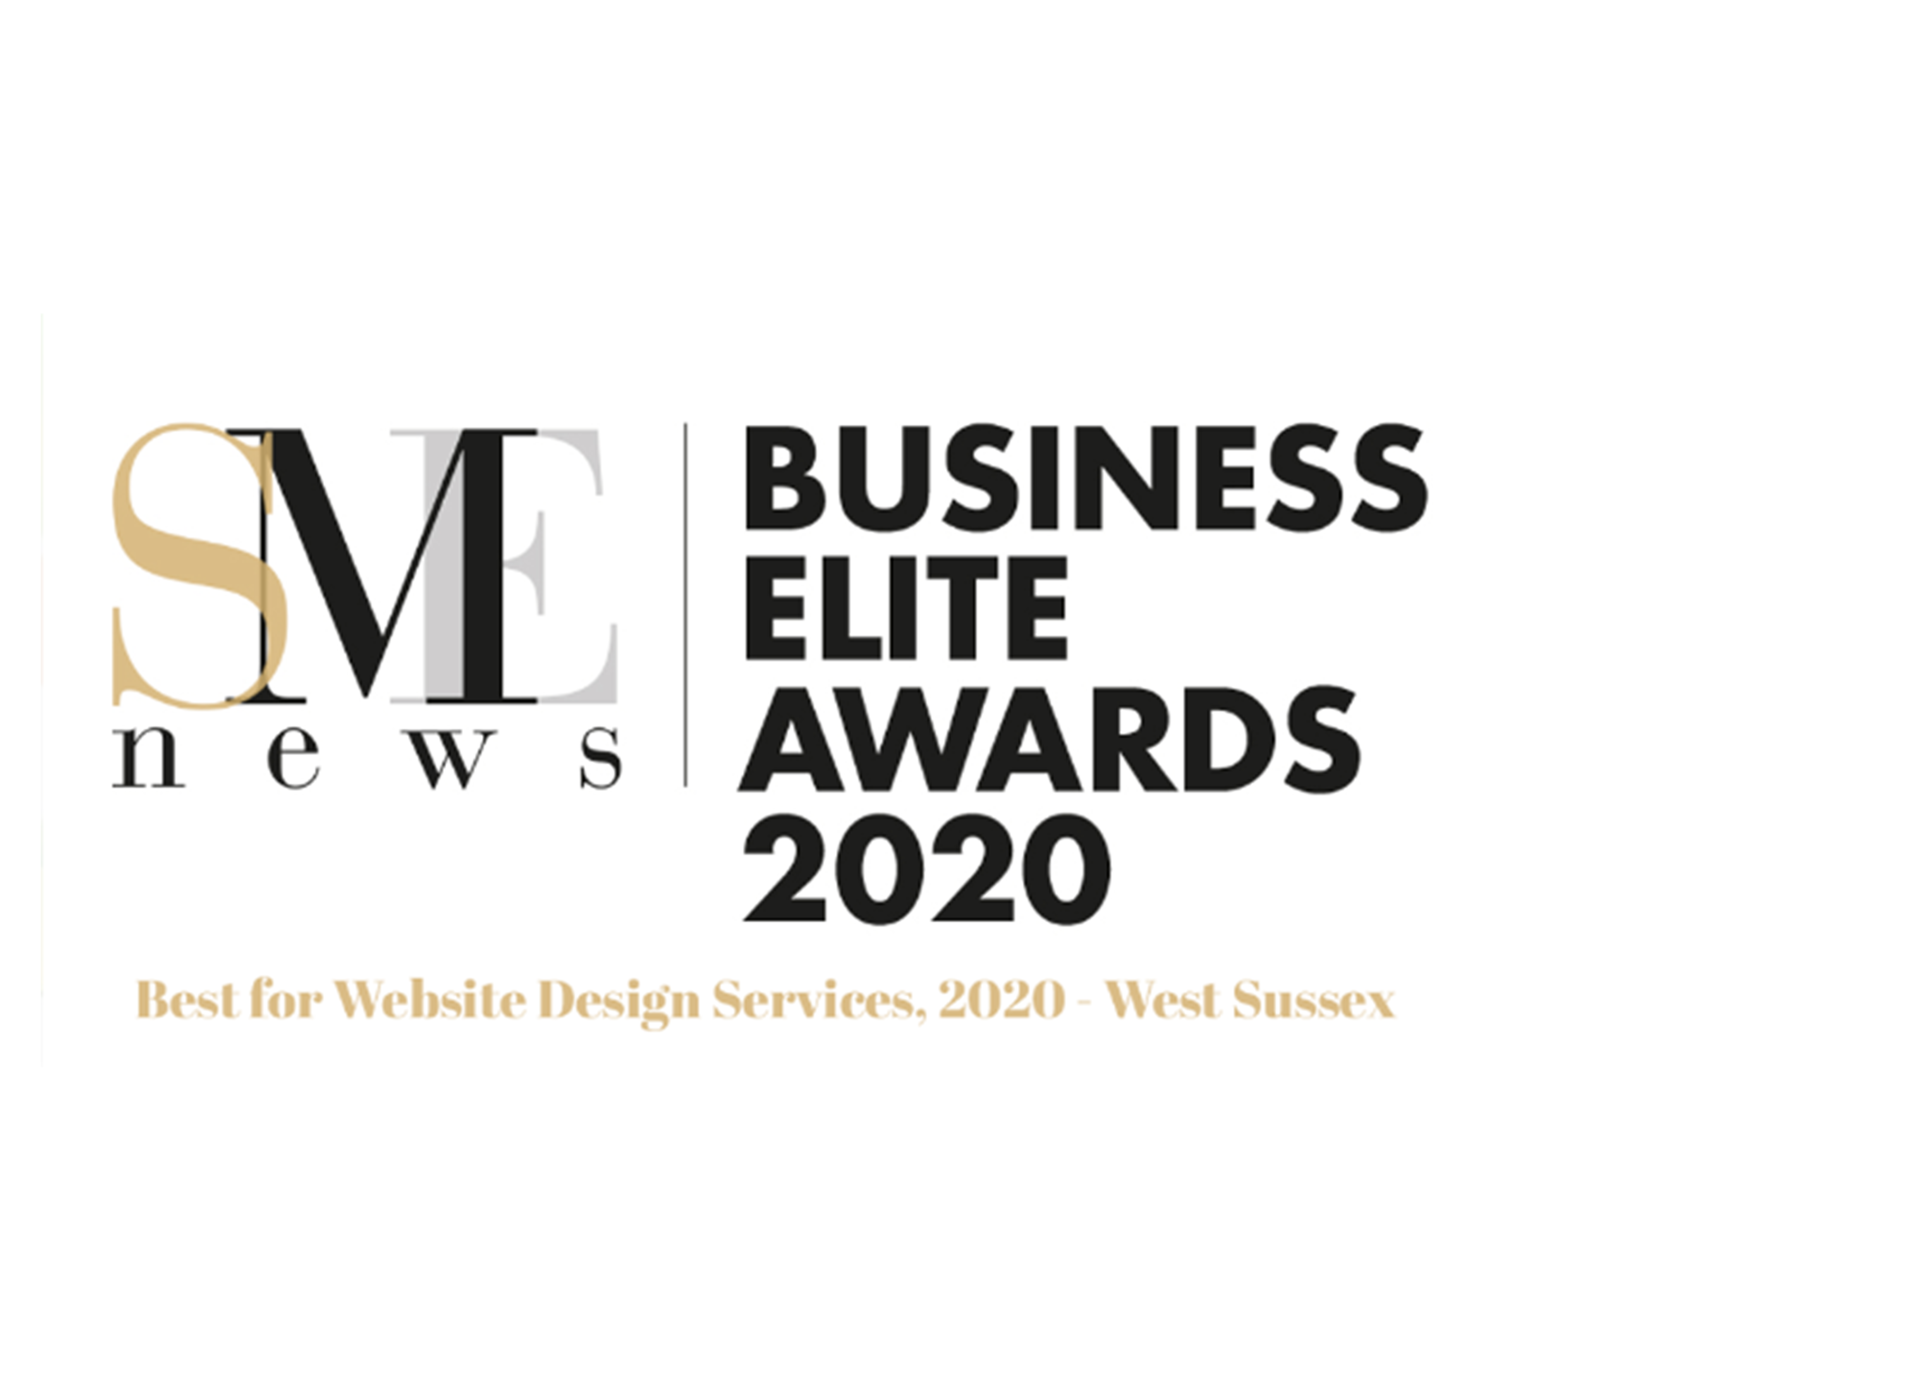 Business Elite awards 2020